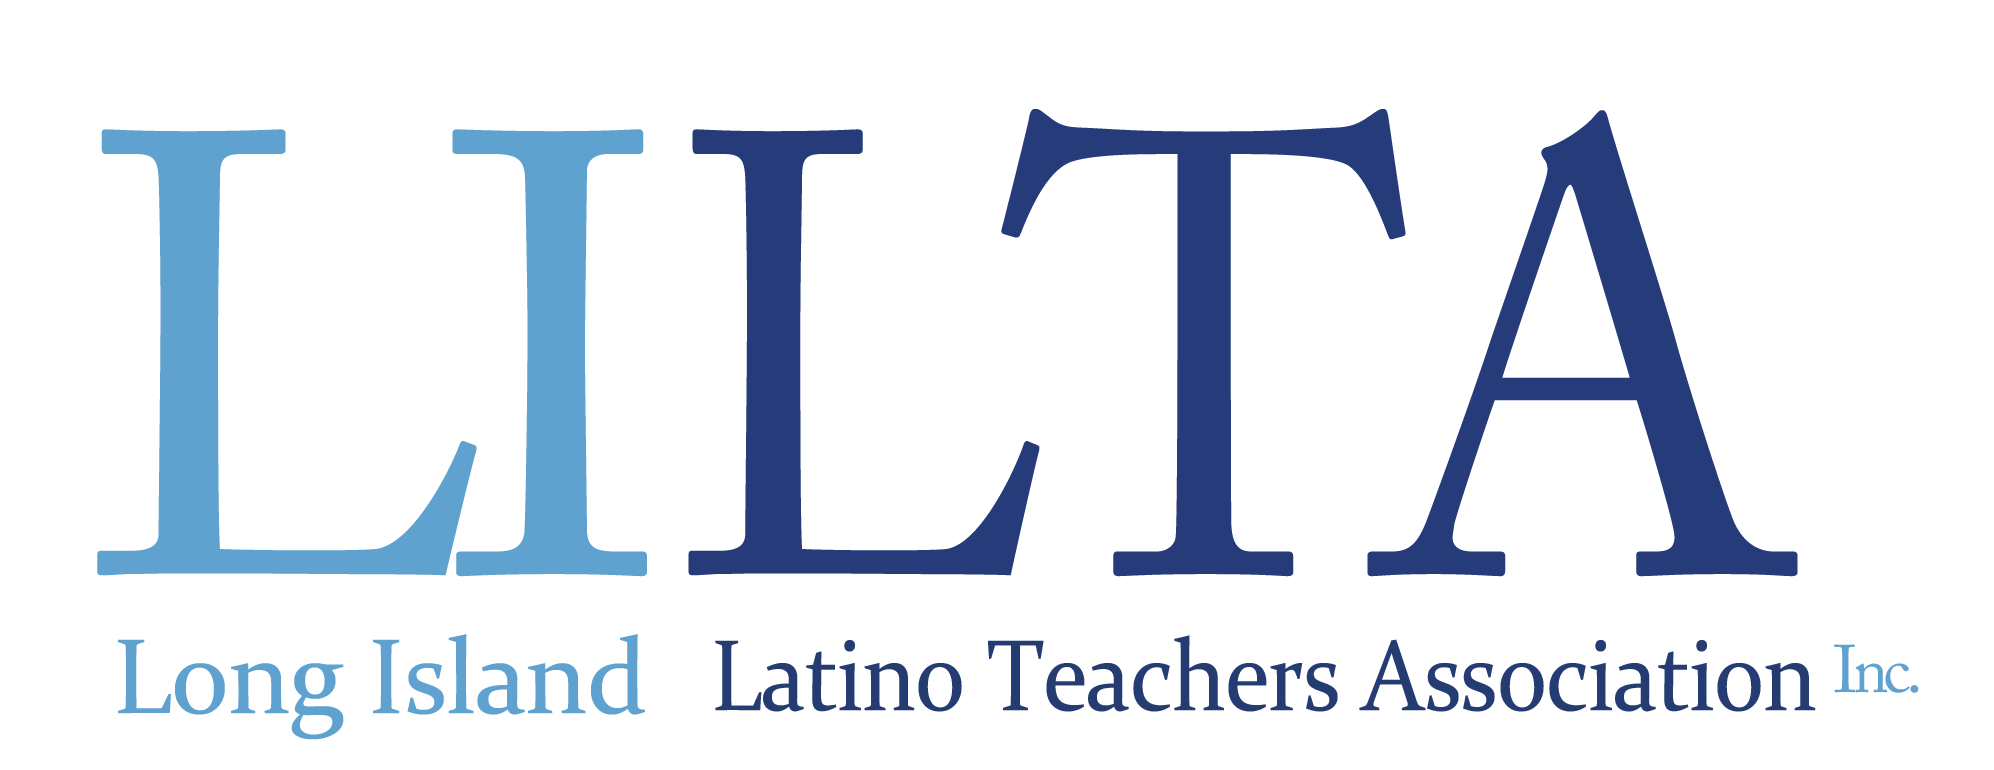 Long Island Latinos Teachers Association